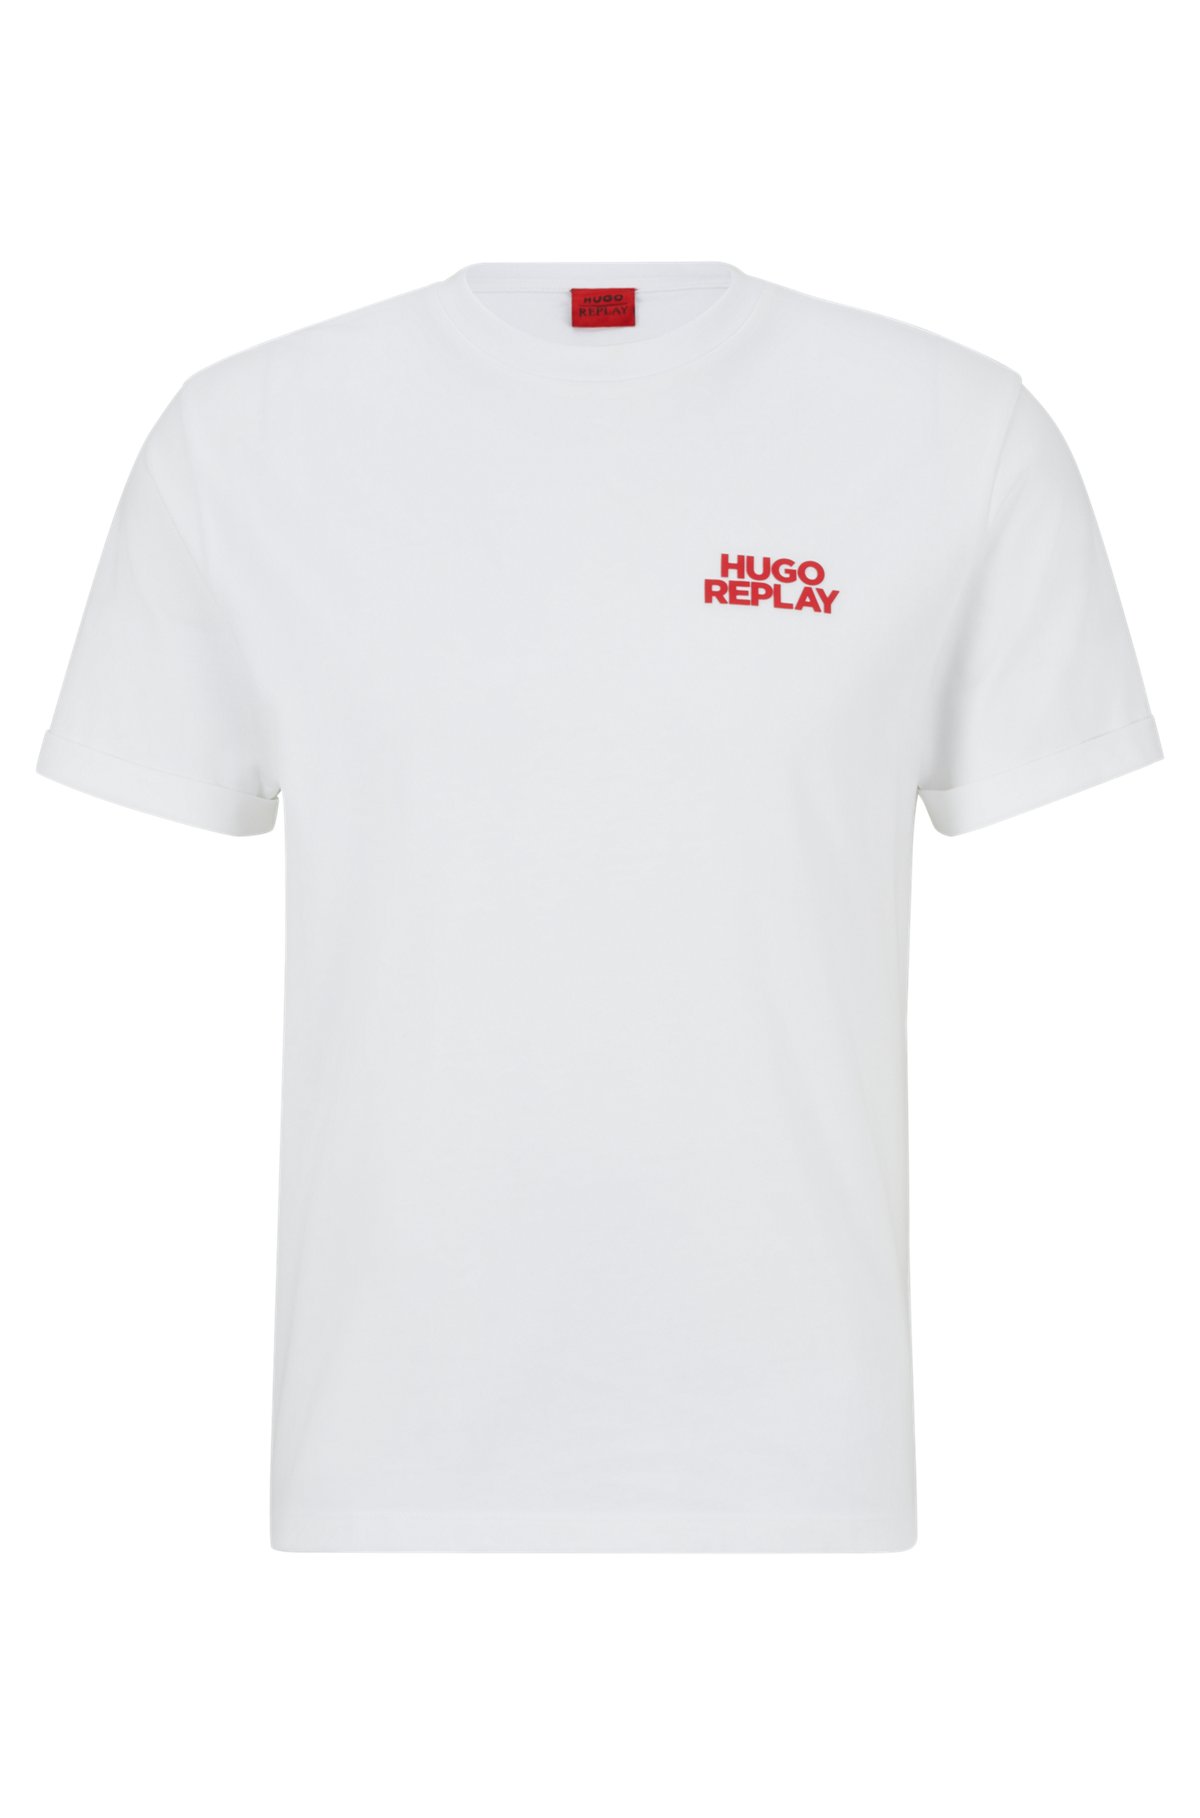 HUGO - HUGO | REPLAY cotton T-shirt with capsule logo print